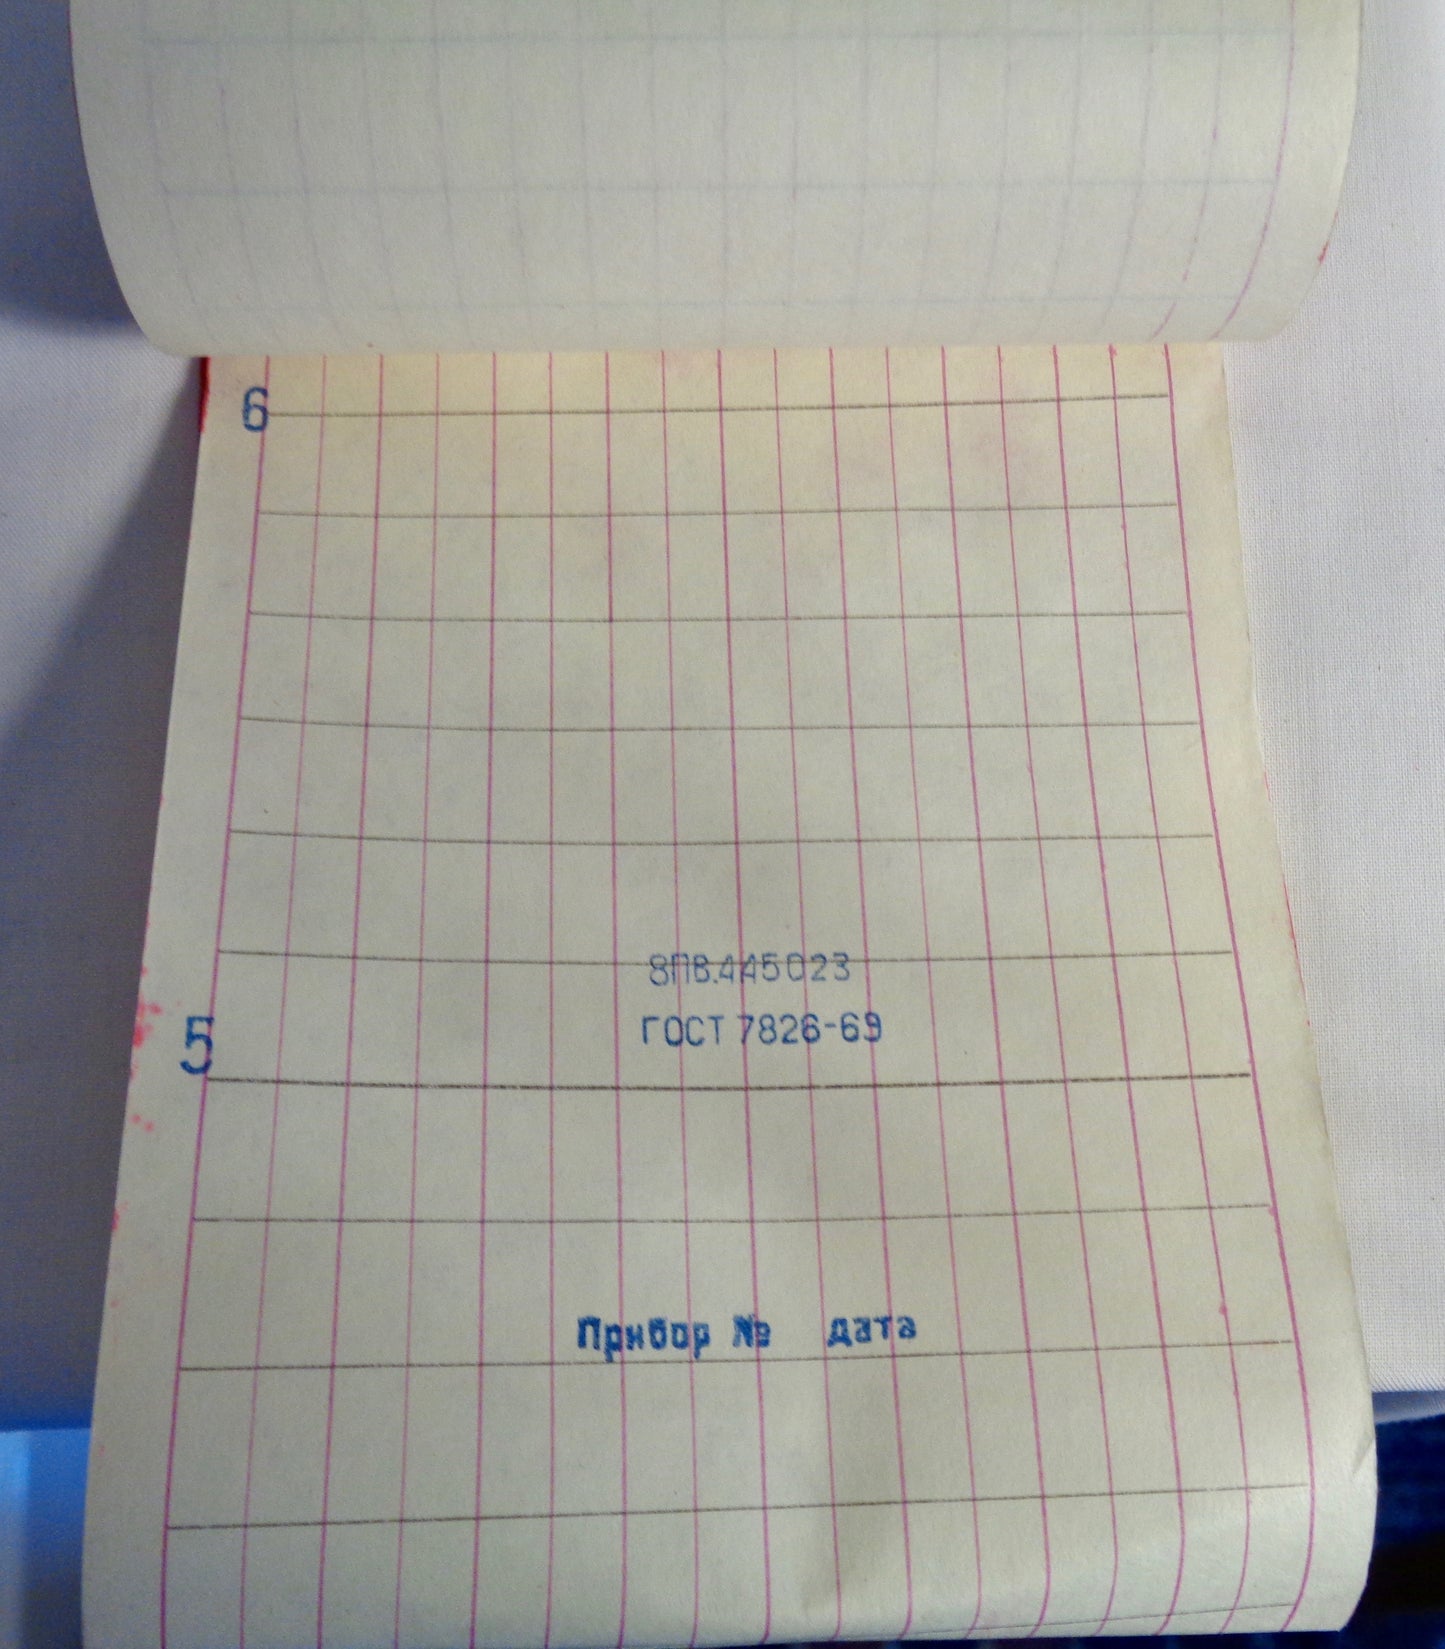 Bakelite Case With Chart Recorder Plotter Ink & Service Kit